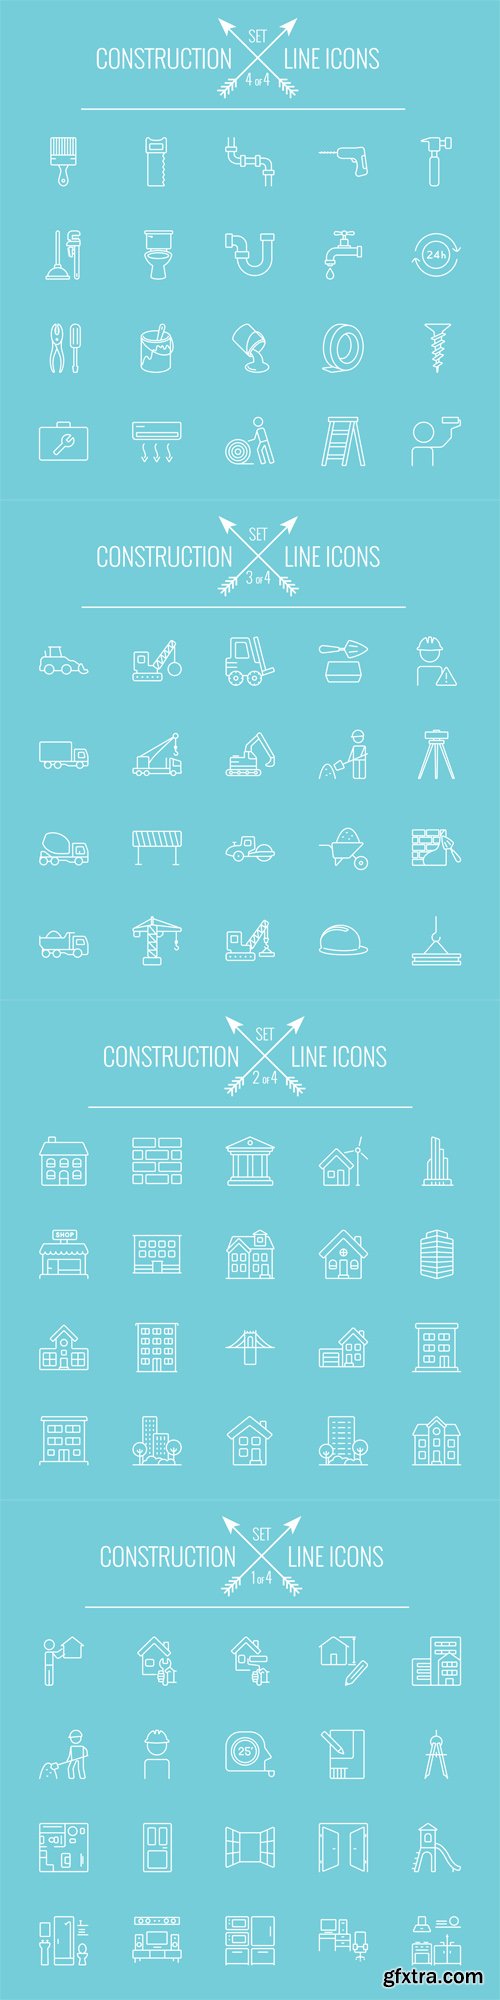 Construction icon set - Vectors A000003